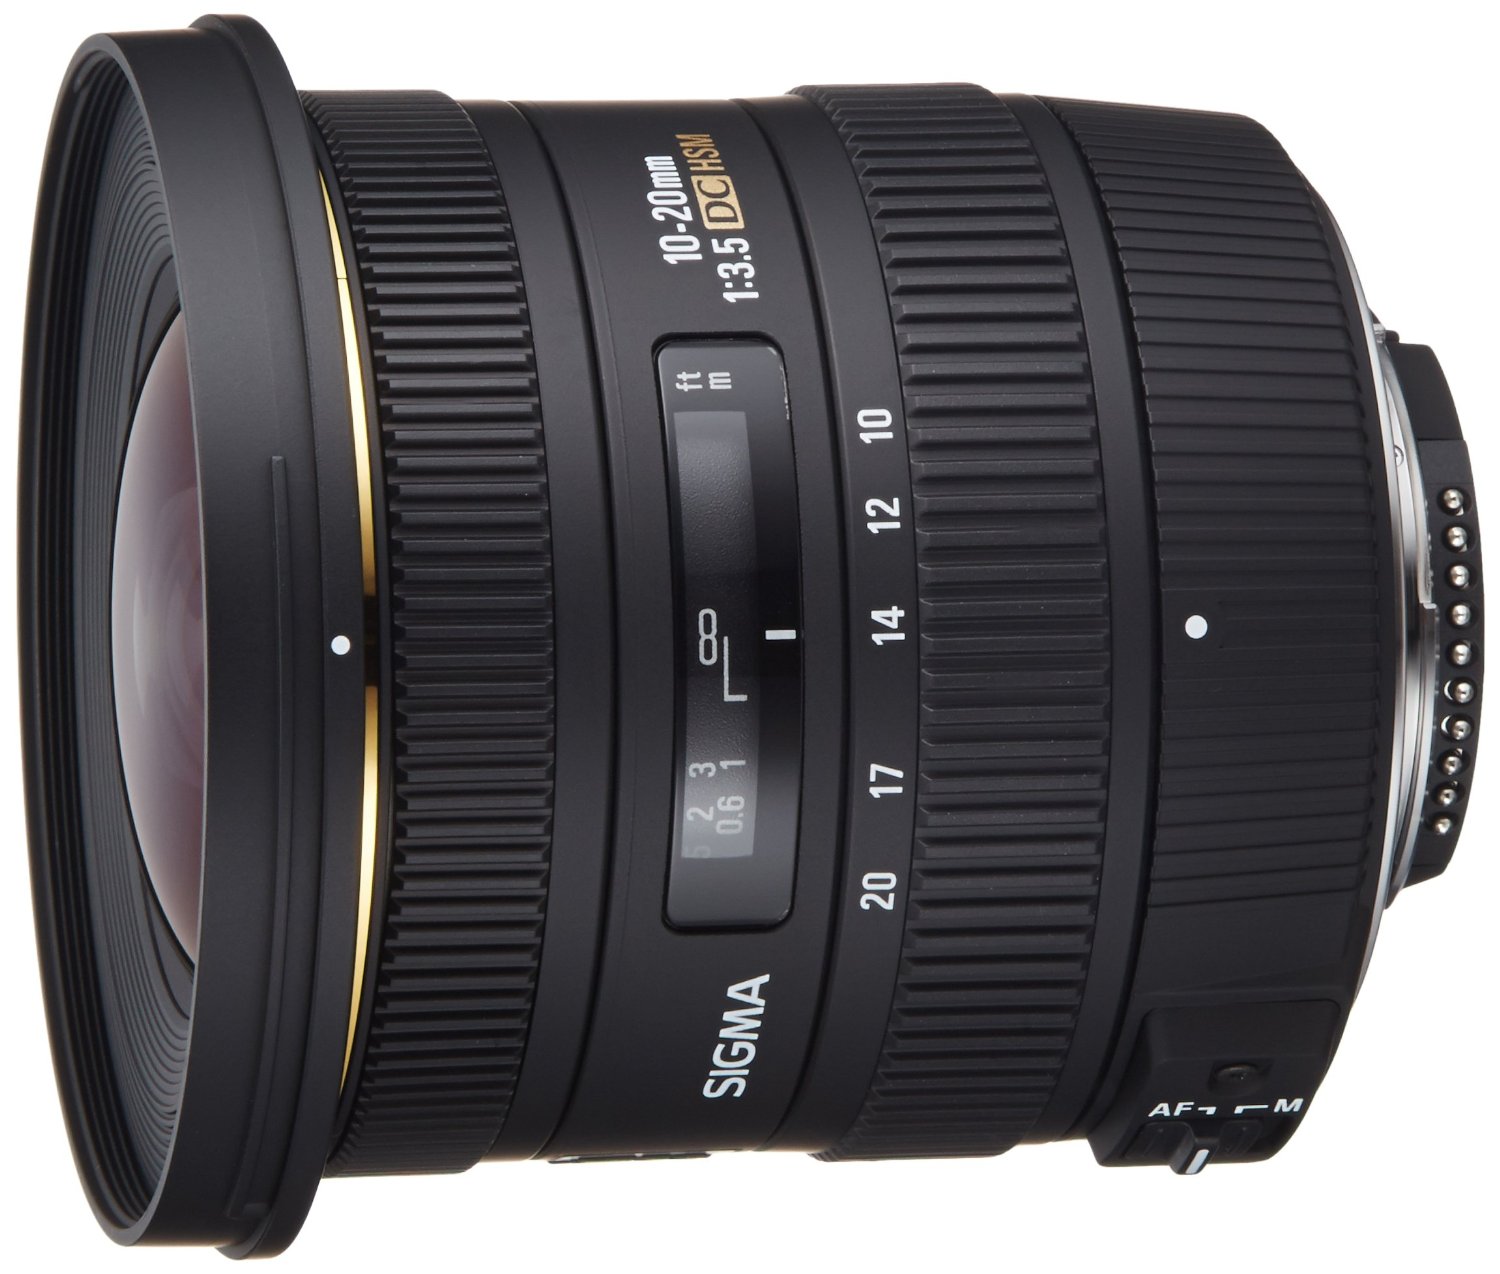 SIGMA 10-20mm f / 3.5 EX DC HSM ELD SLD Lente gran angular asférica para cámaras SLR digitales Nikon